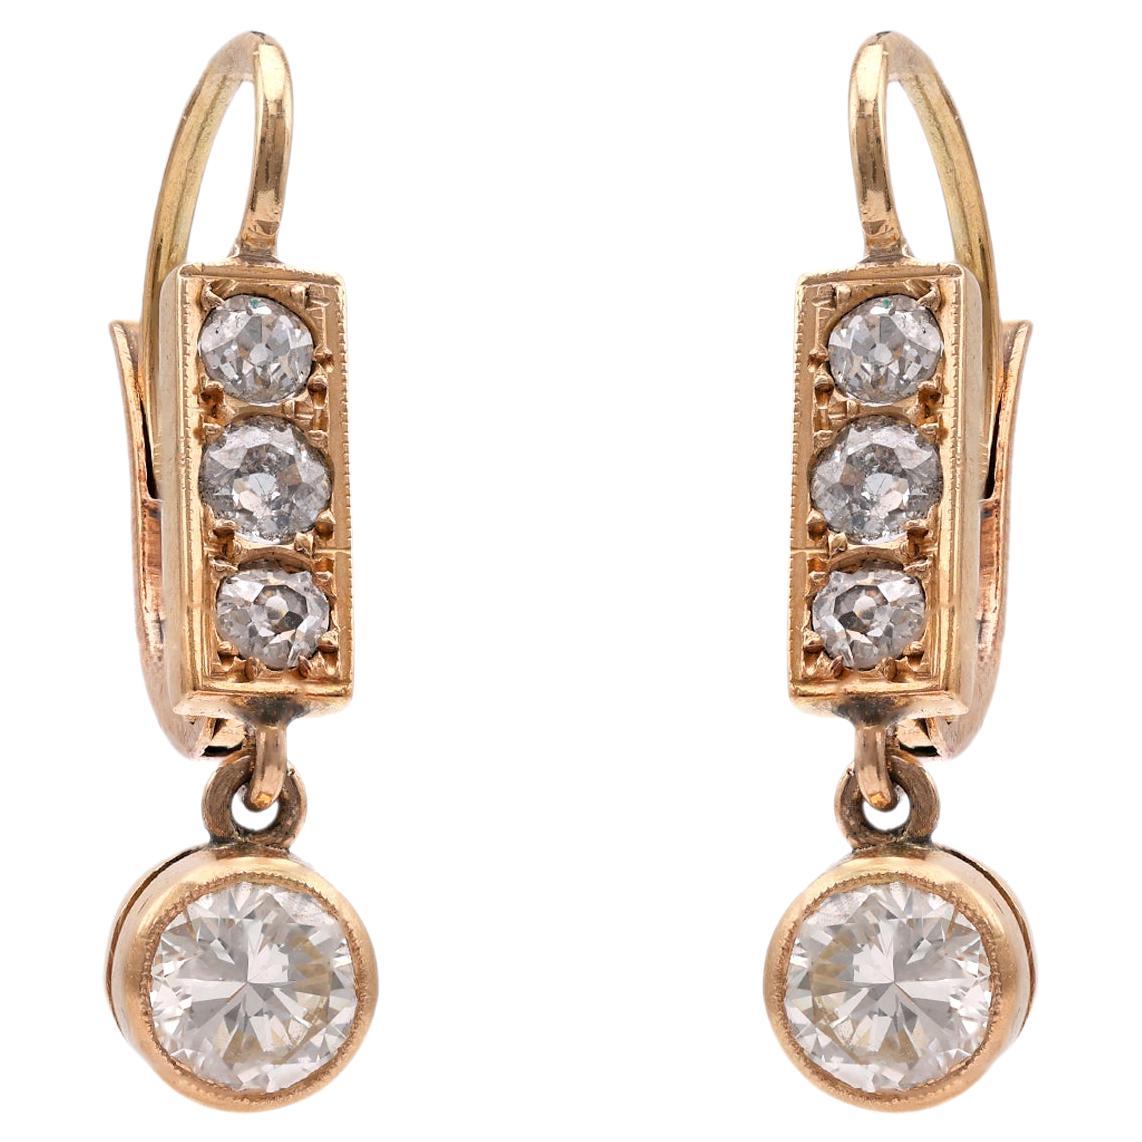 Antique Inspired Diamond 18k Yellow Gold Drop Earrings